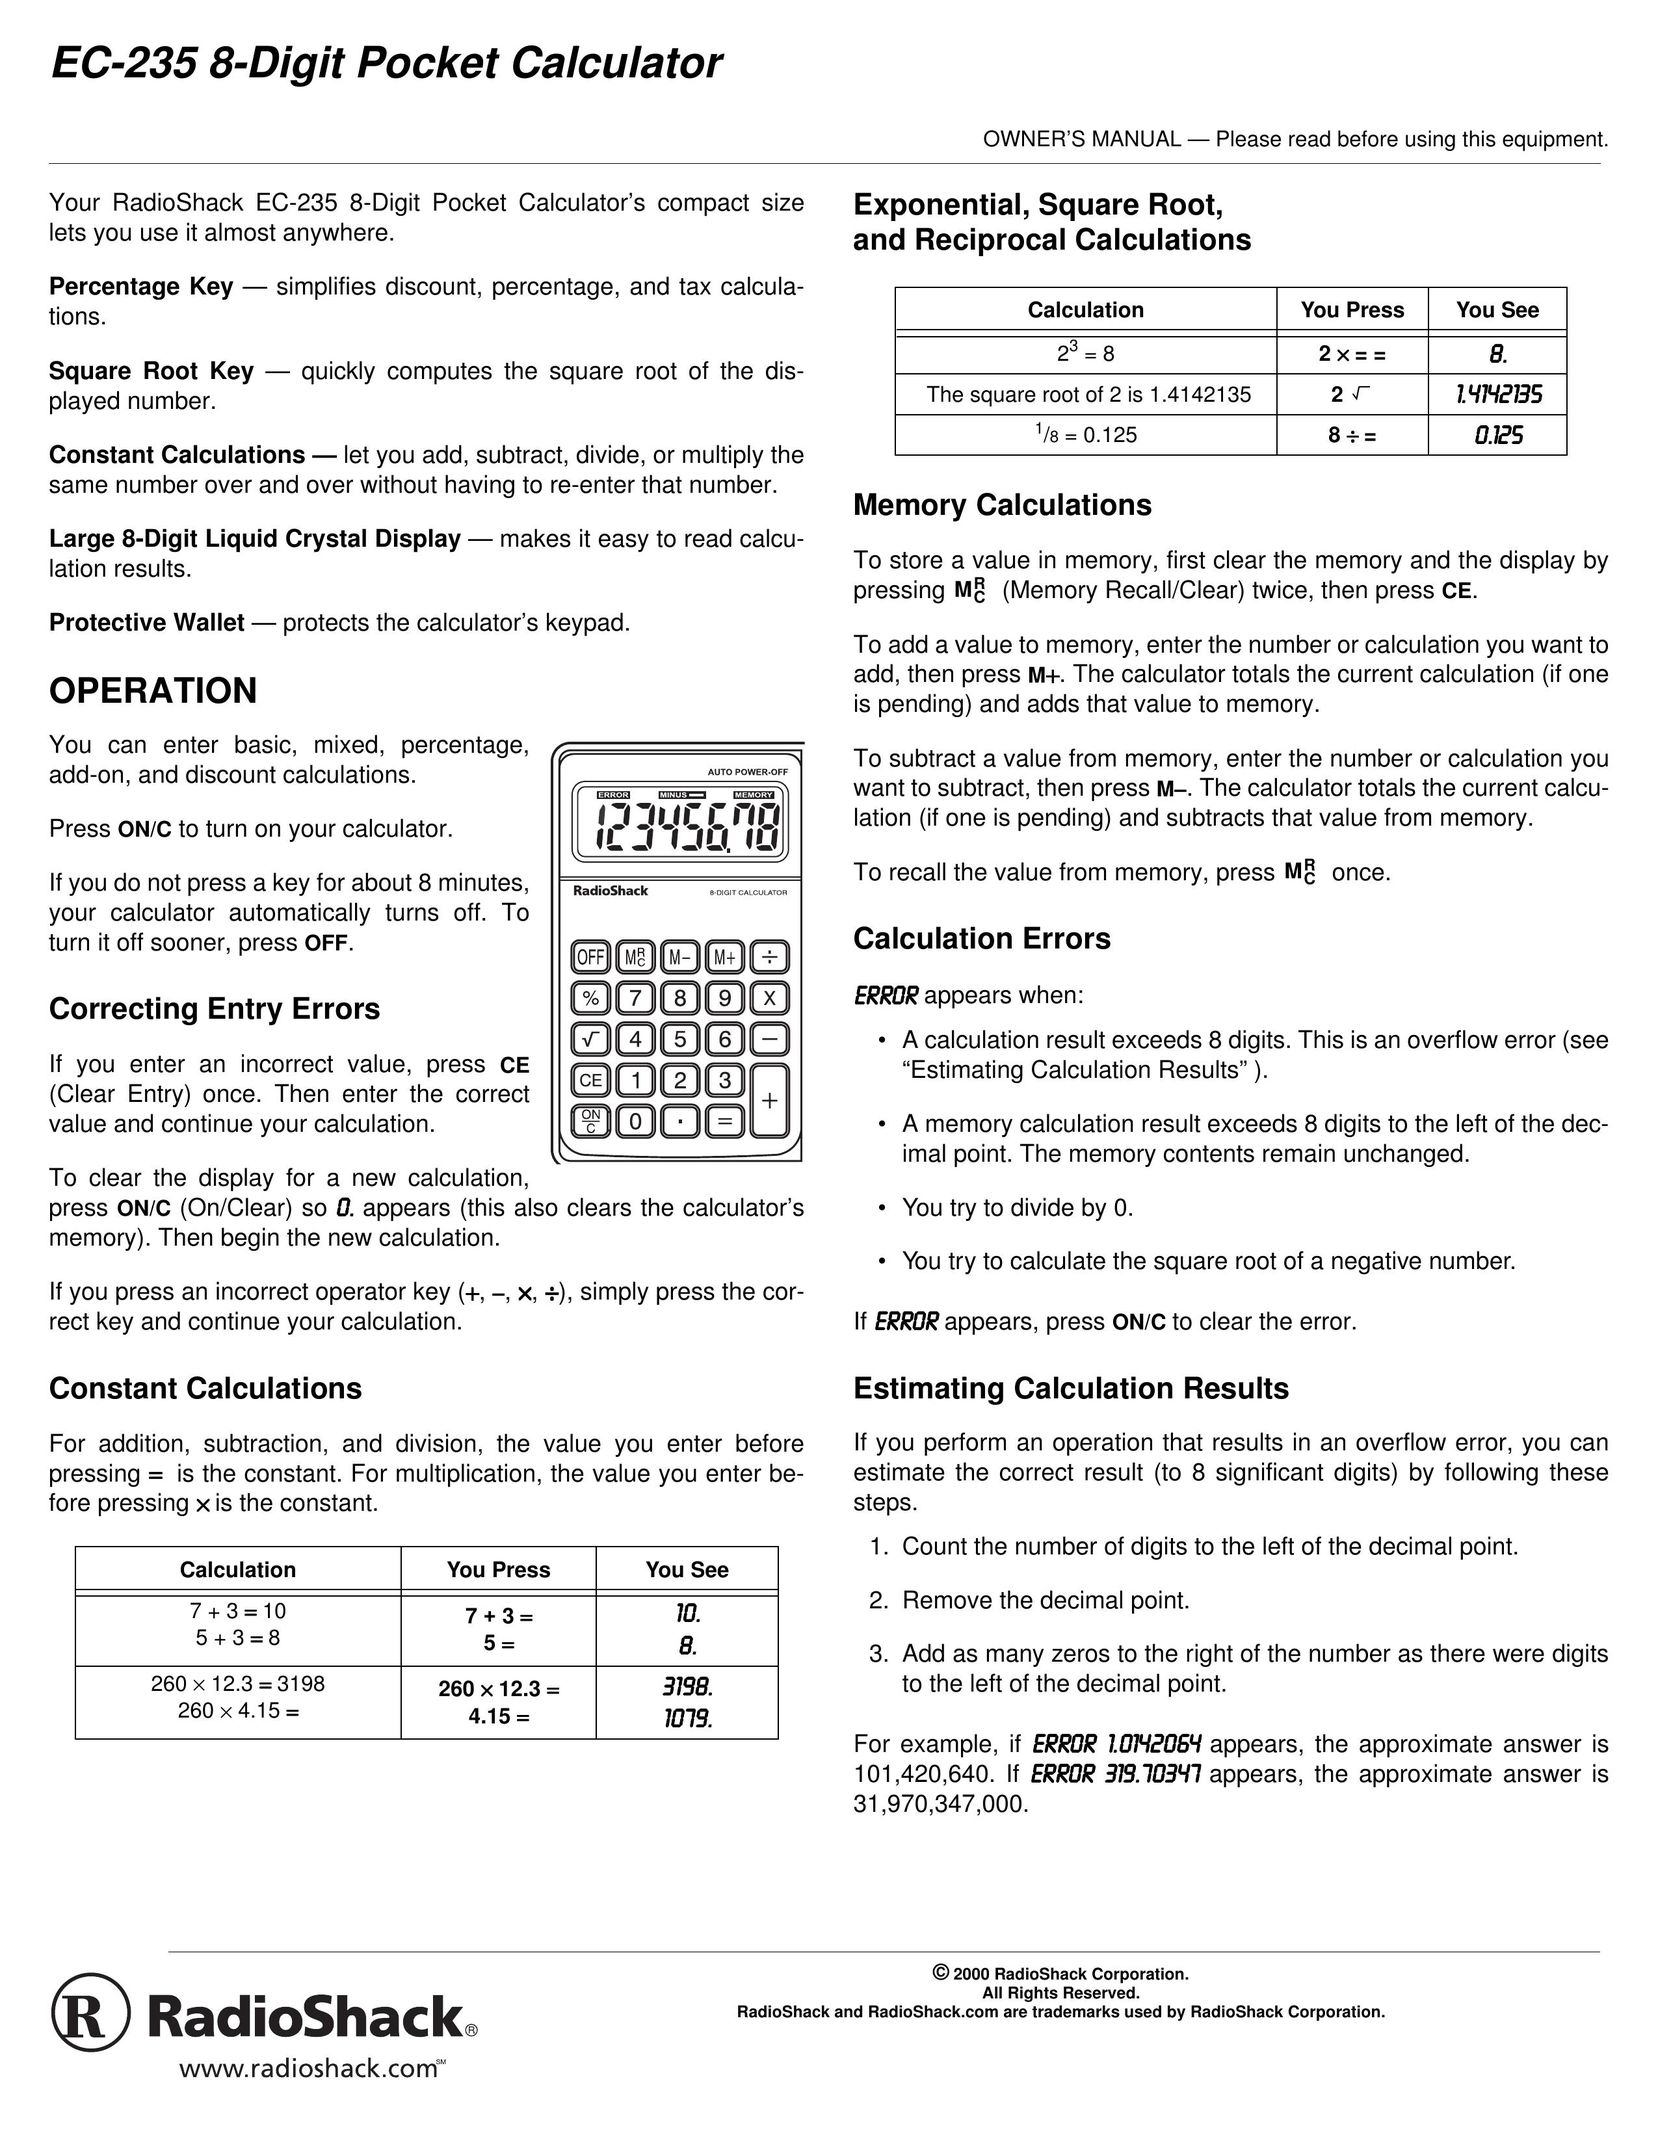 Radio Shack EC-235 Calculator User Manual